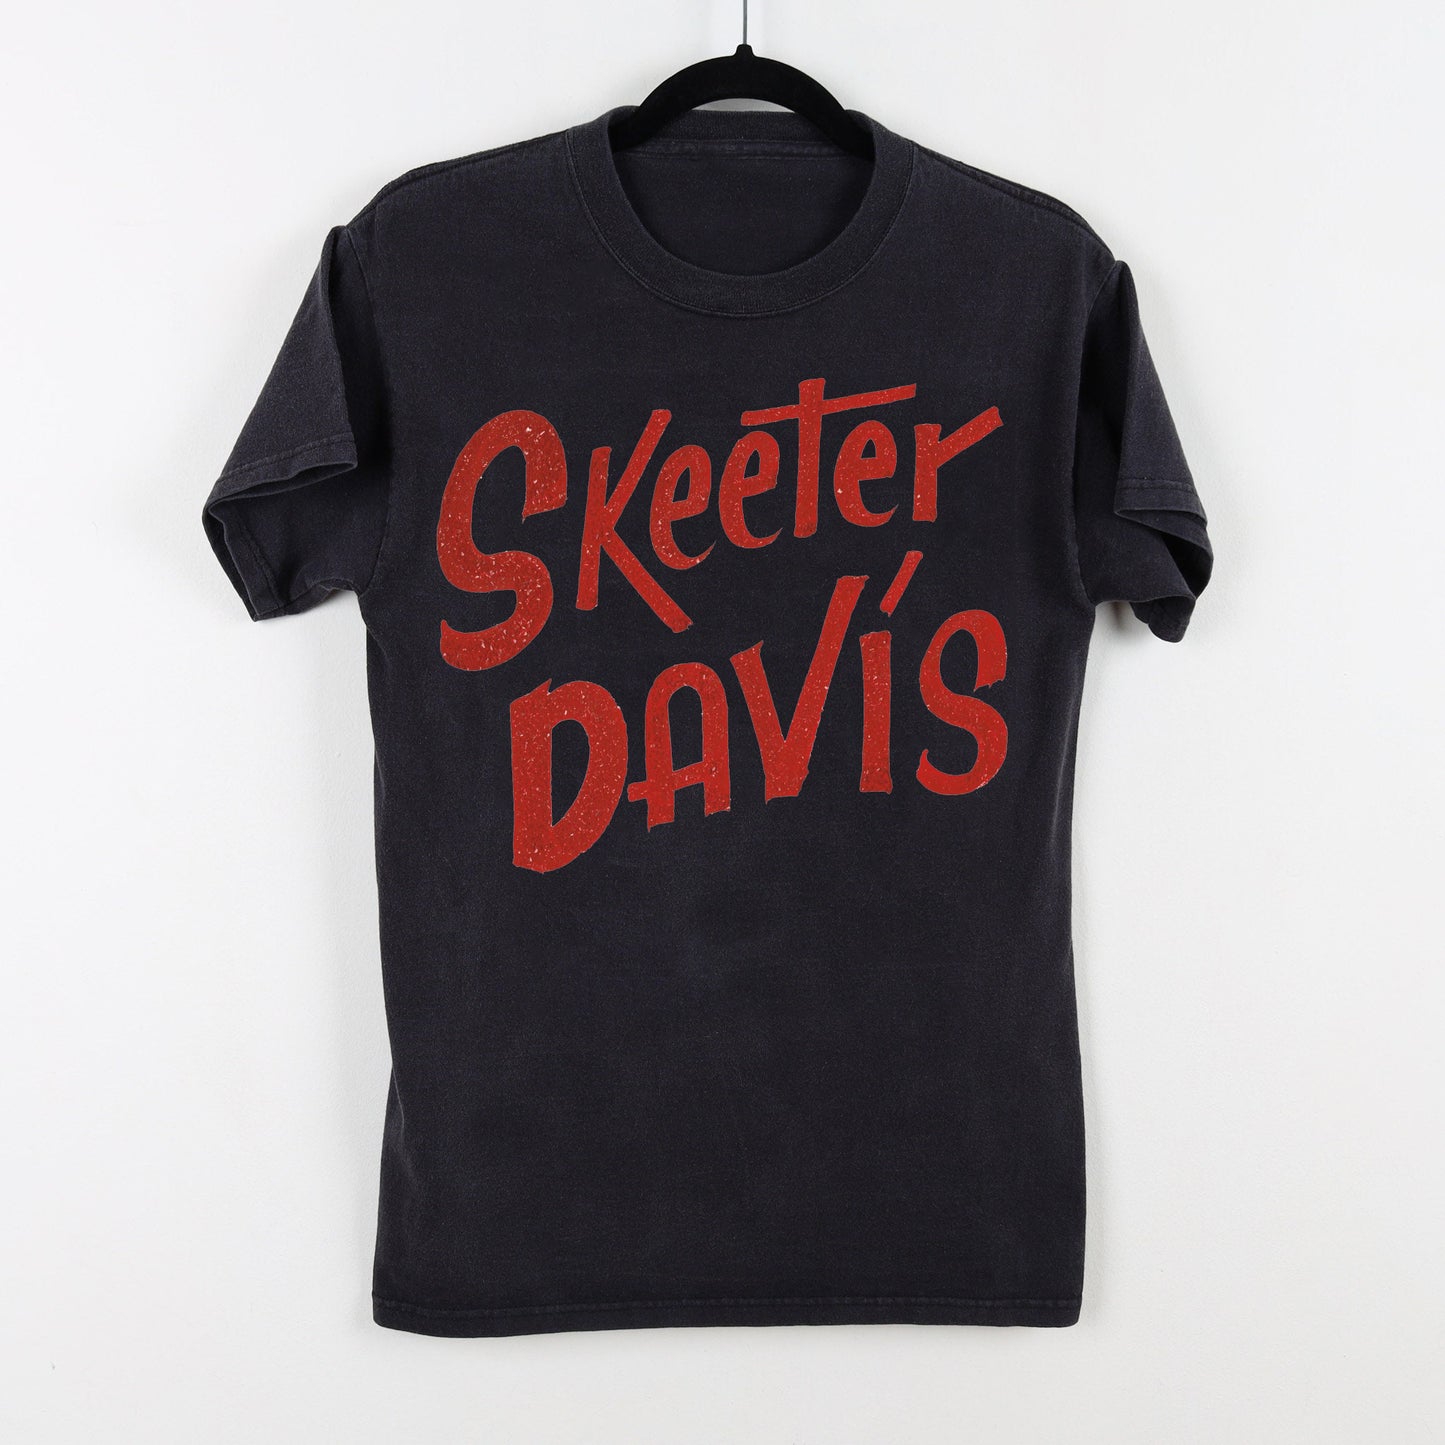 Unisex Skeeter Davis Vintage Retro 60s Am Country T-Shirt